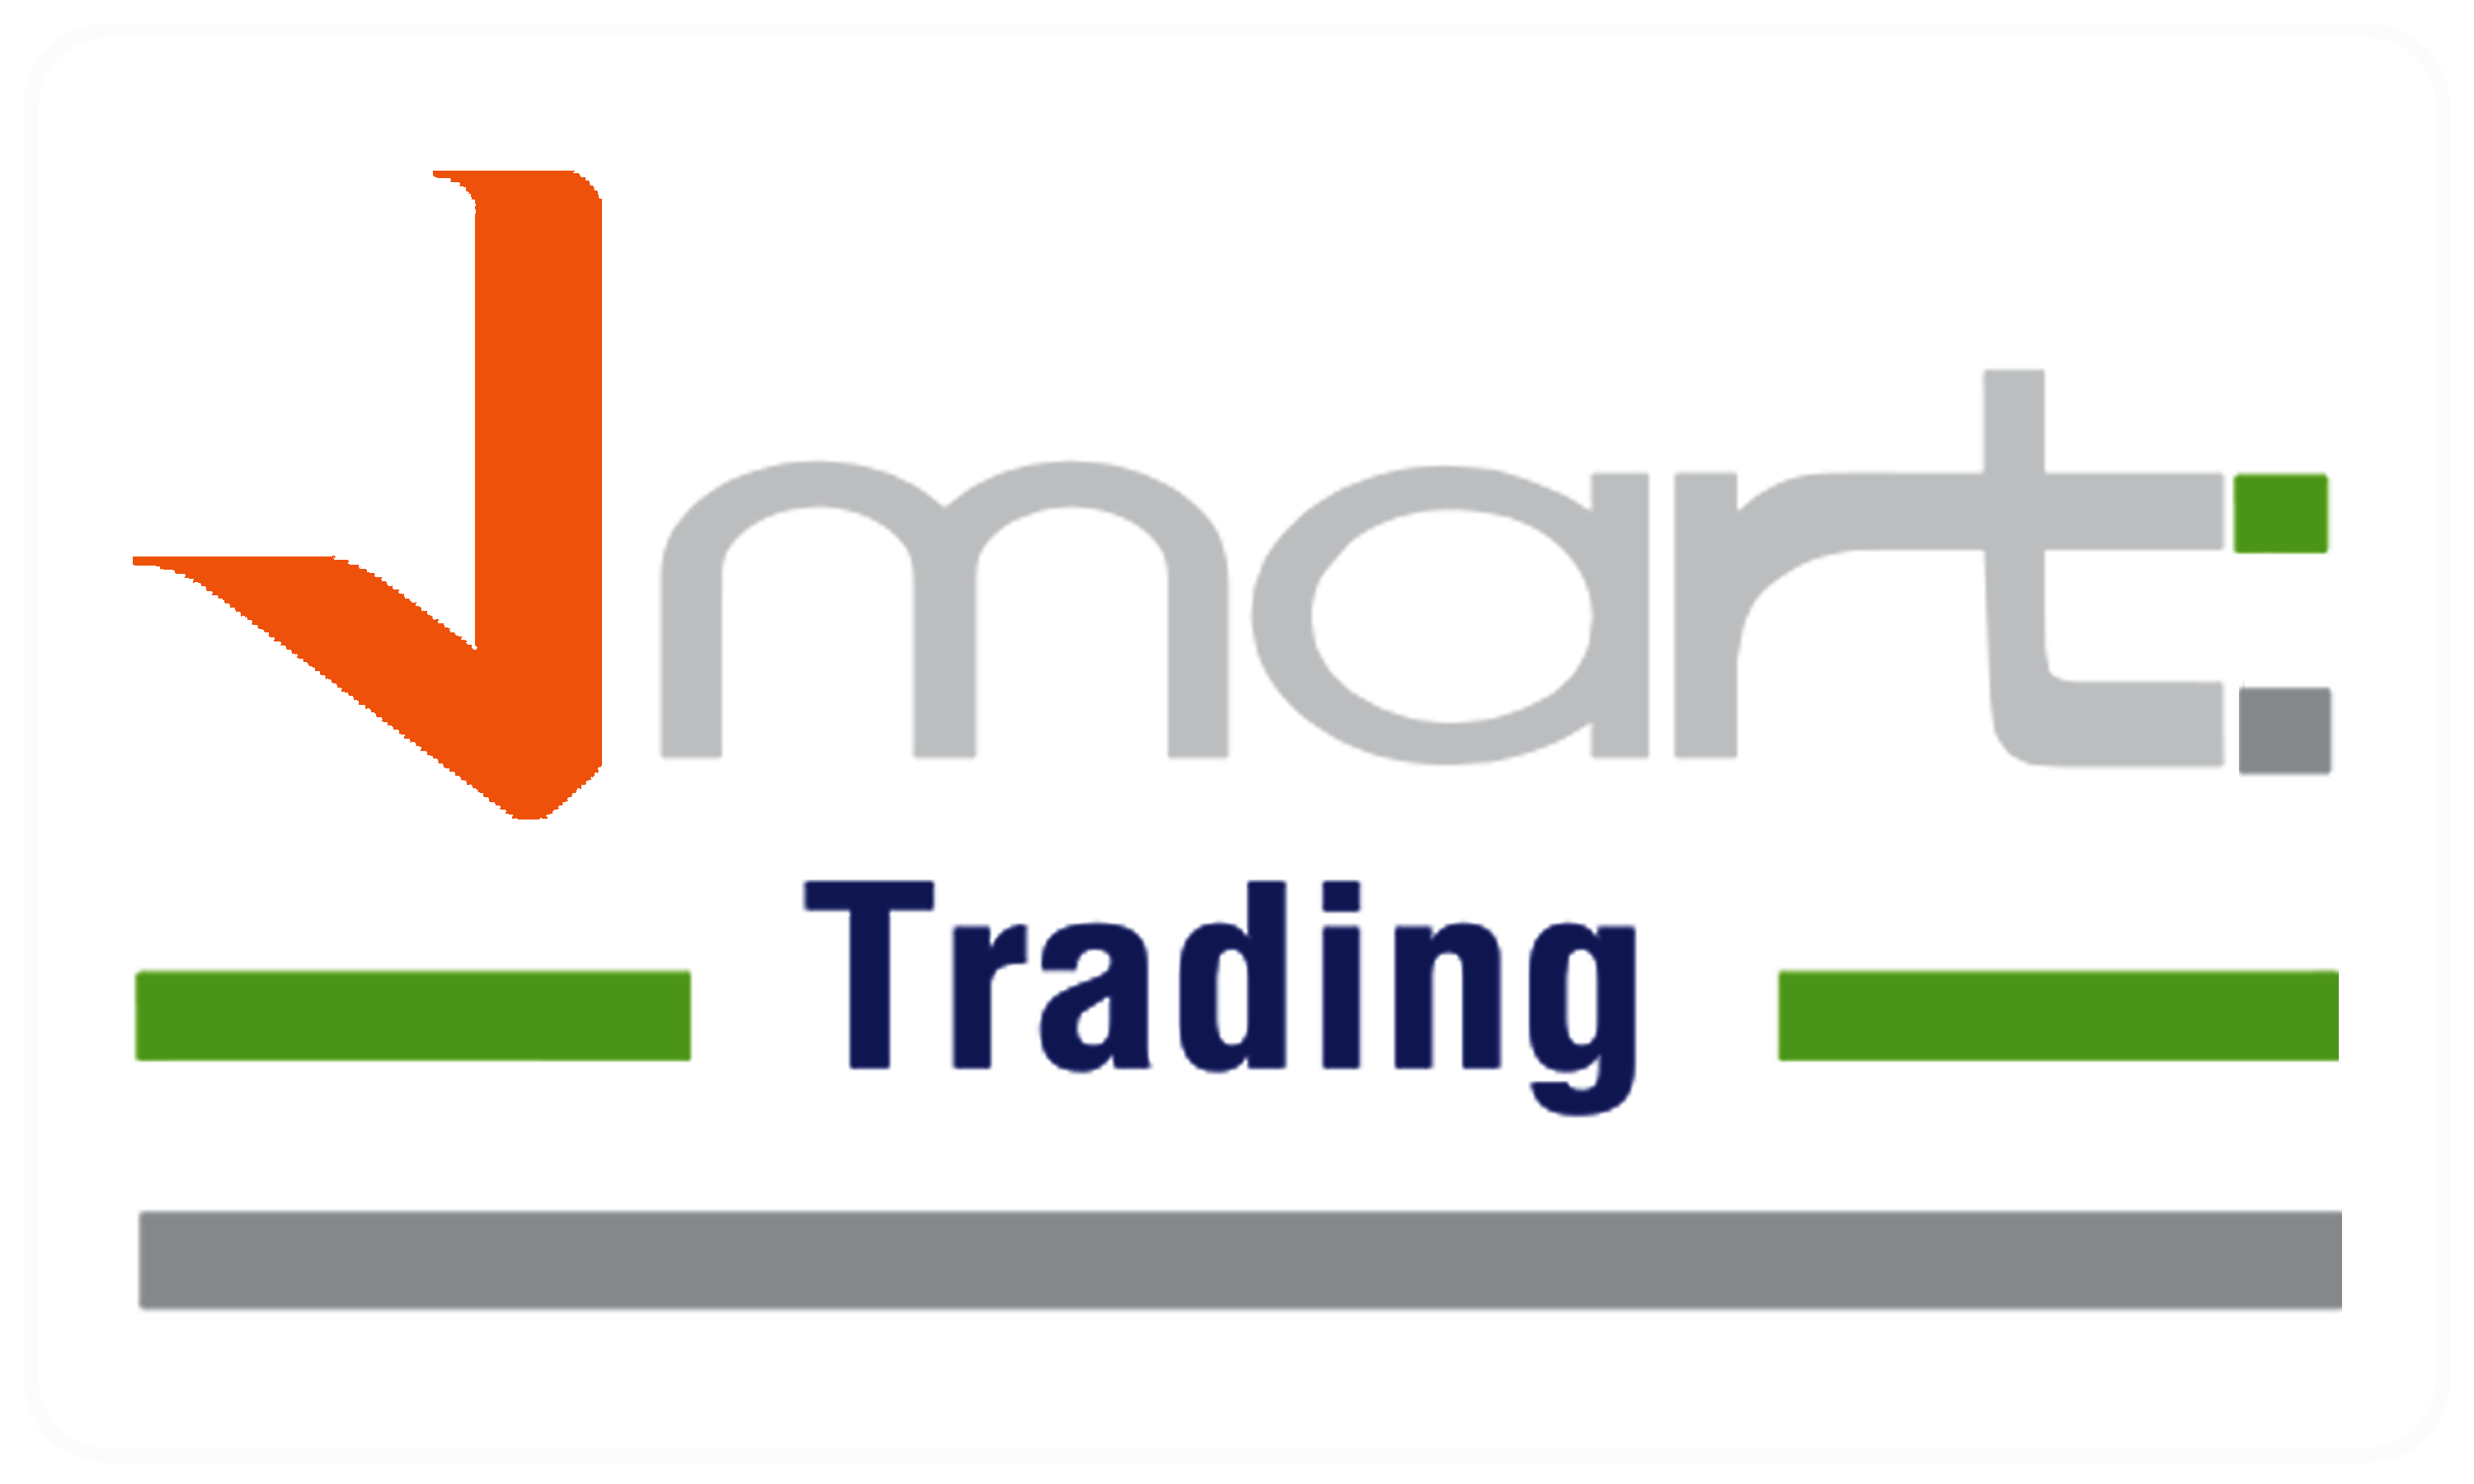 J Mart Trading